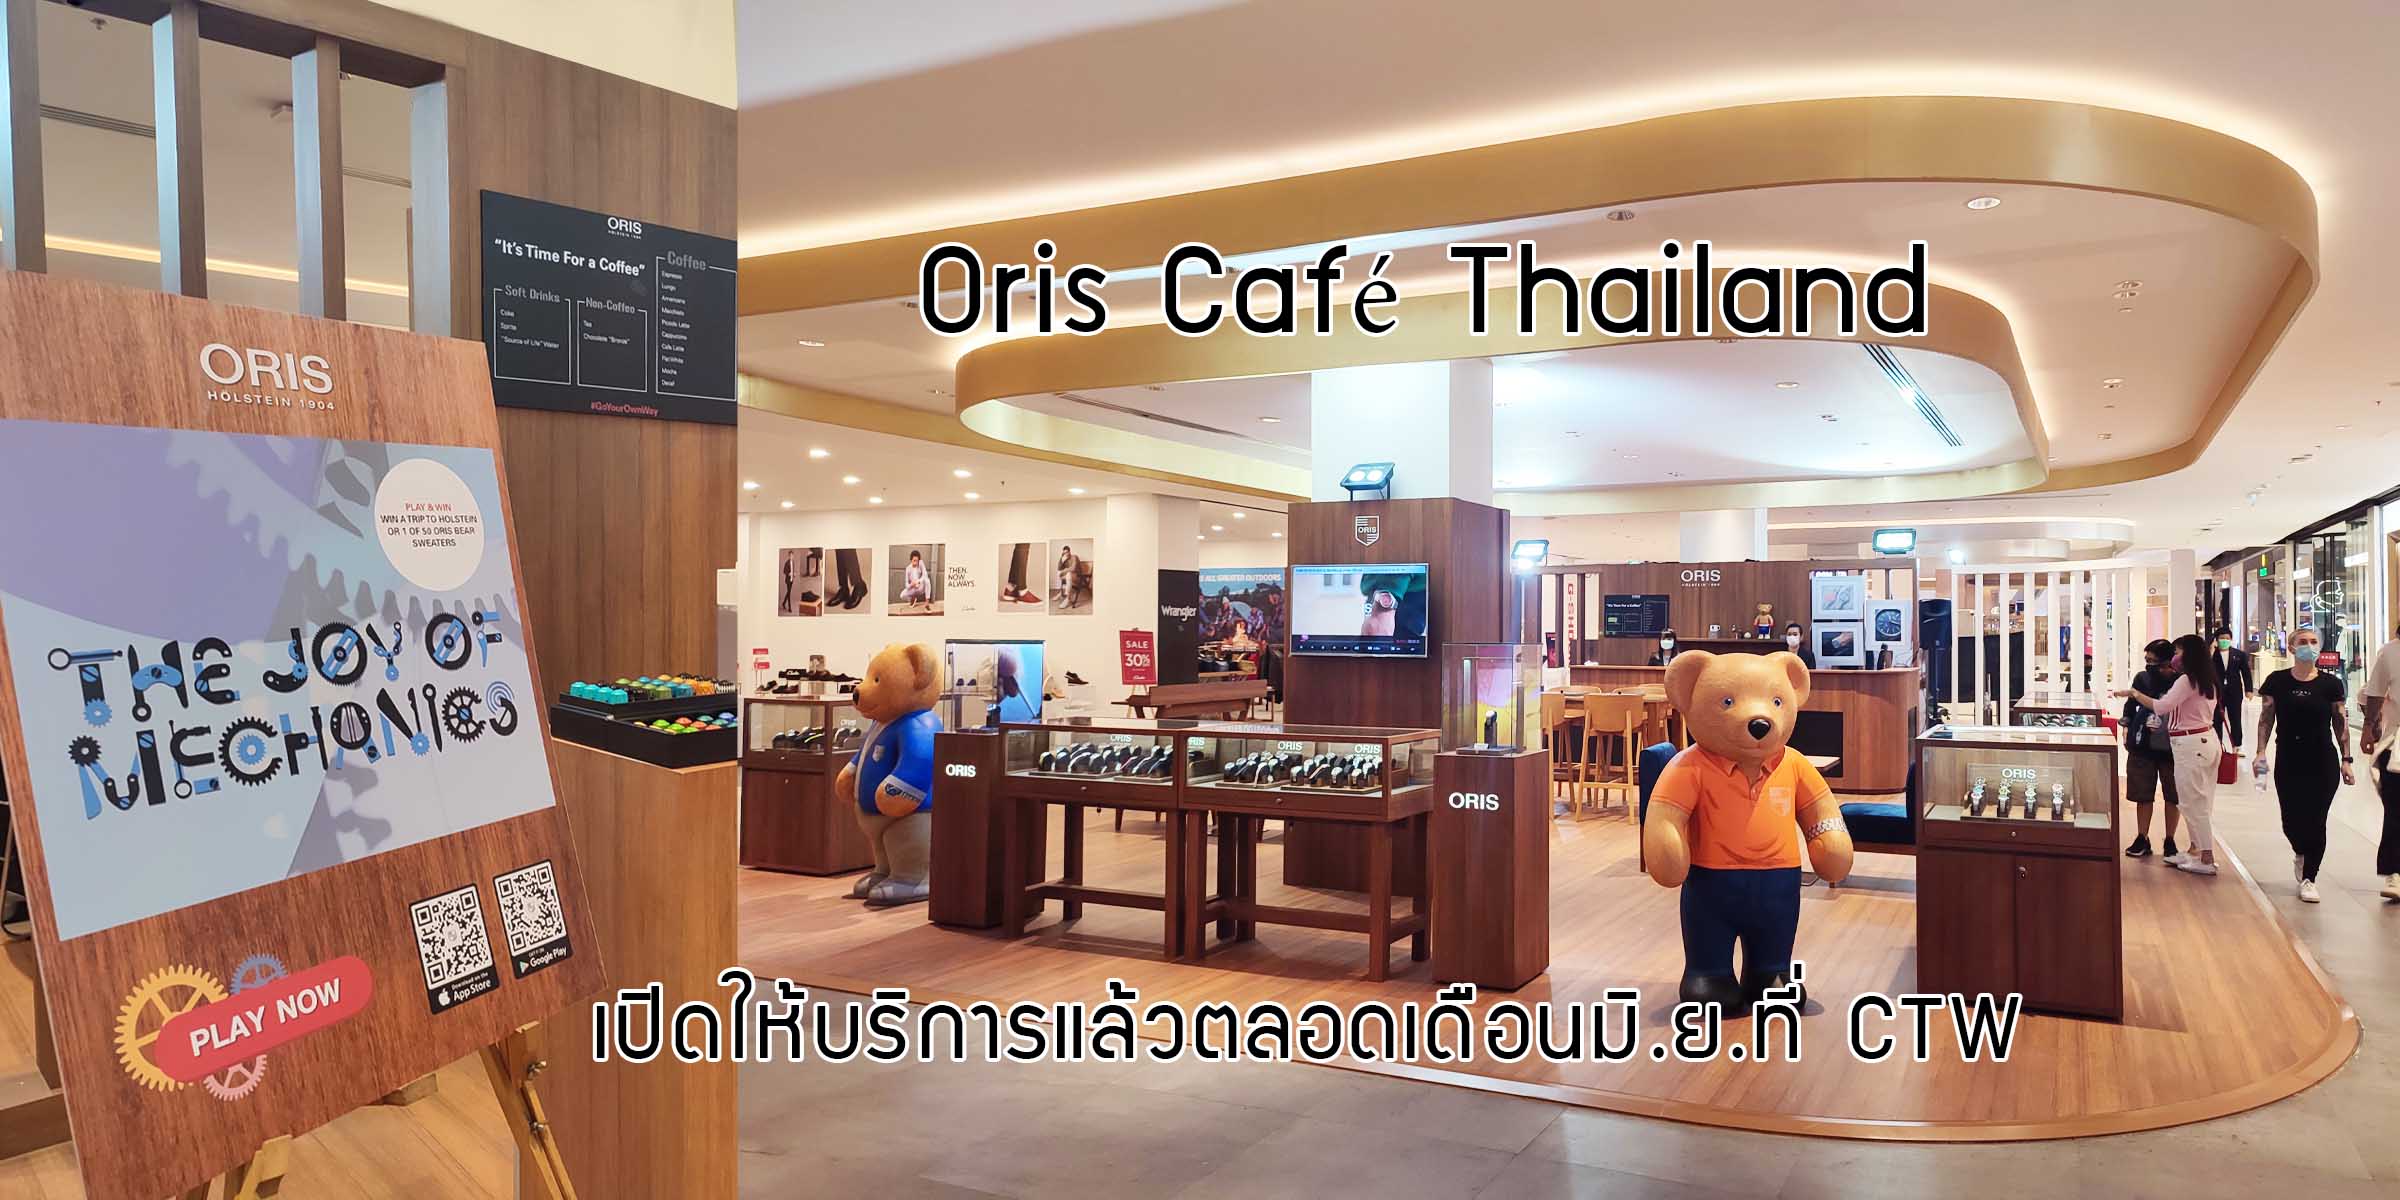 Oris Cafe Thailand